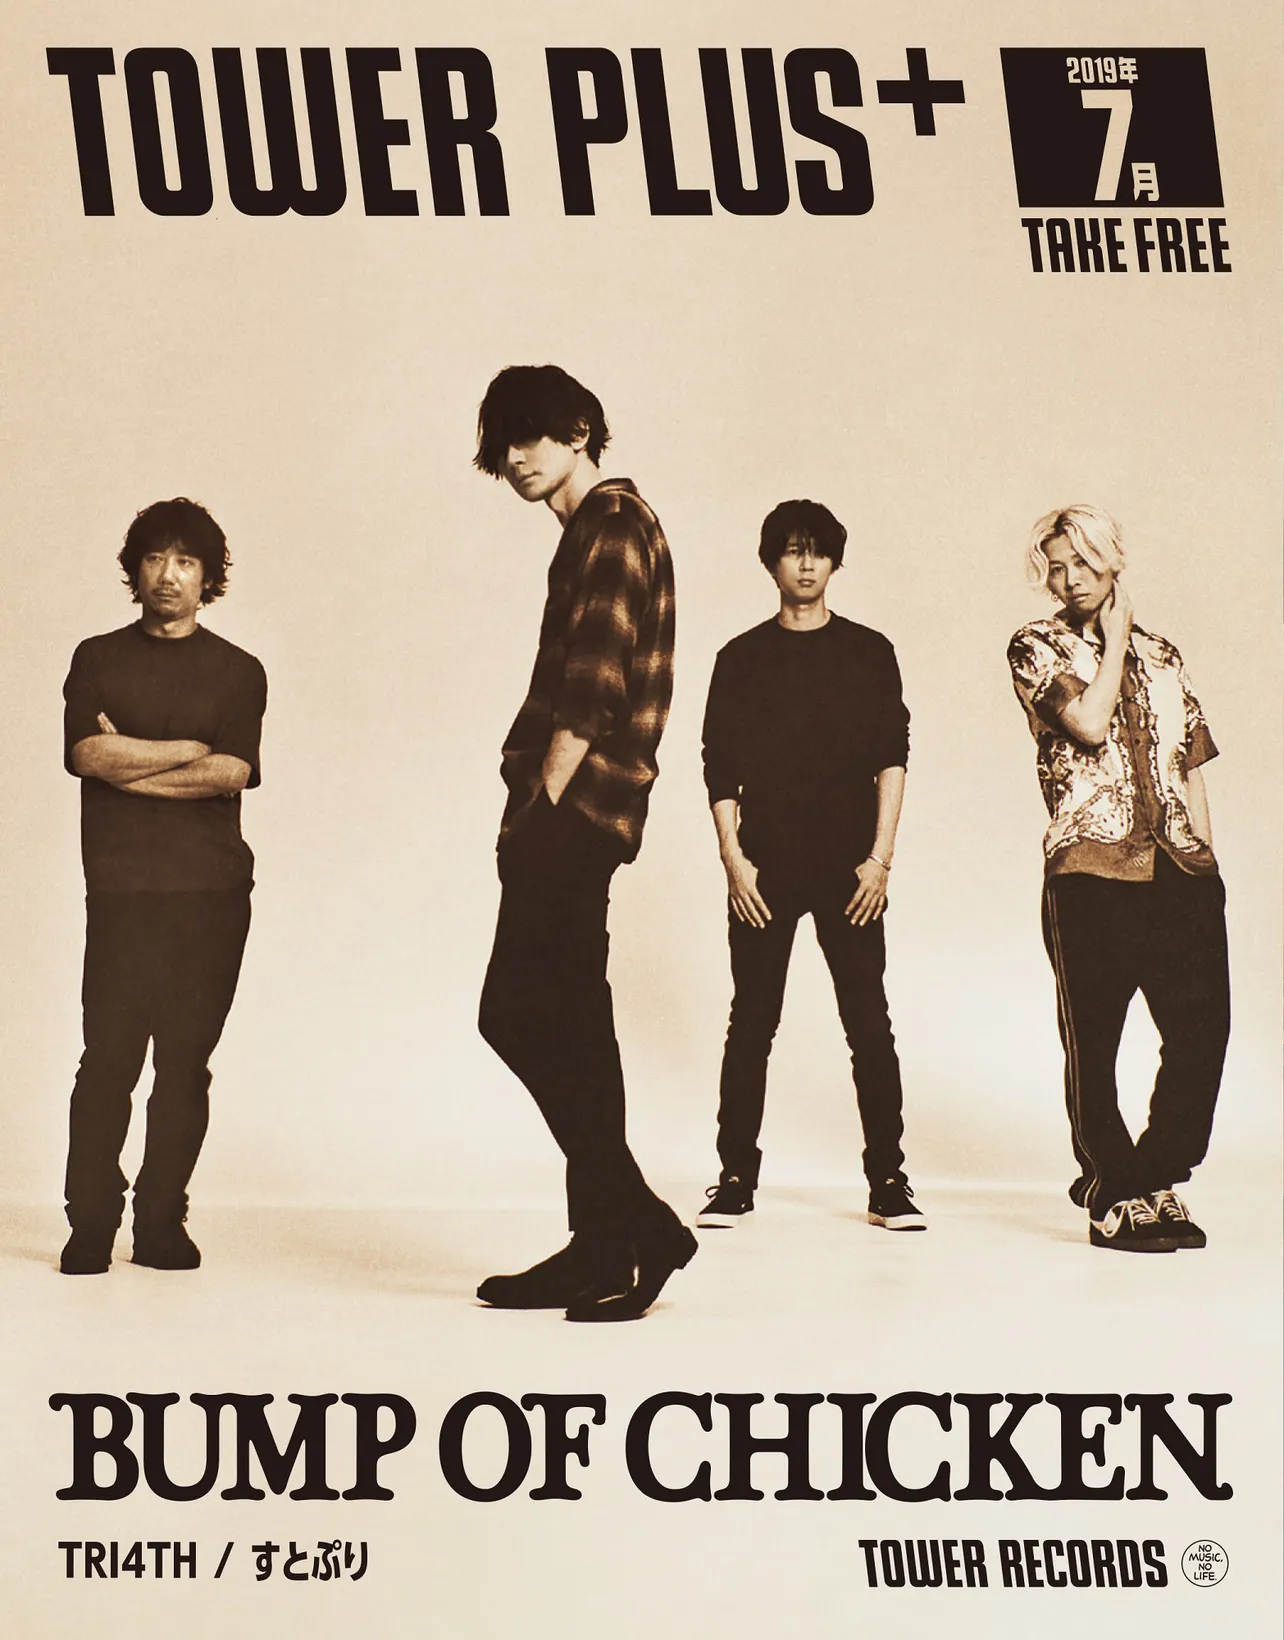 BUMP OF CHICKENが表紙の「TOWER PLUS＋7月1日号」は現在各店舗にて配布中